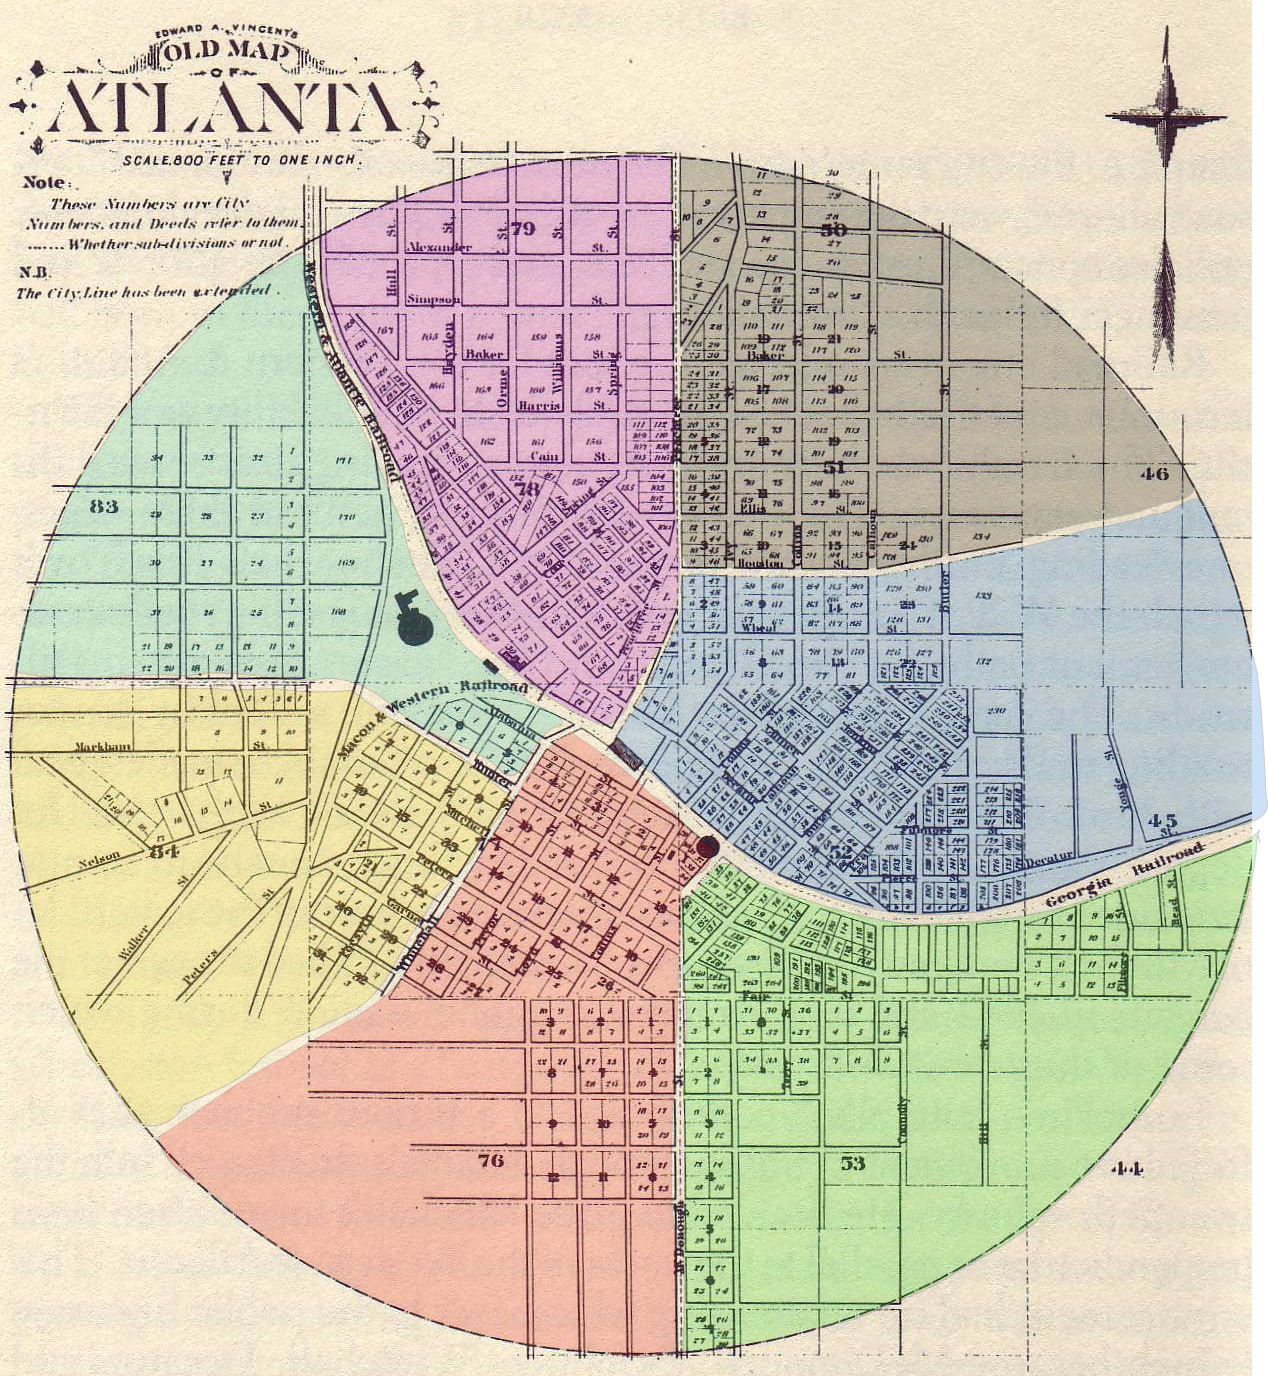 1871 Atlanta Wards, by Wikimedia user Jolomo